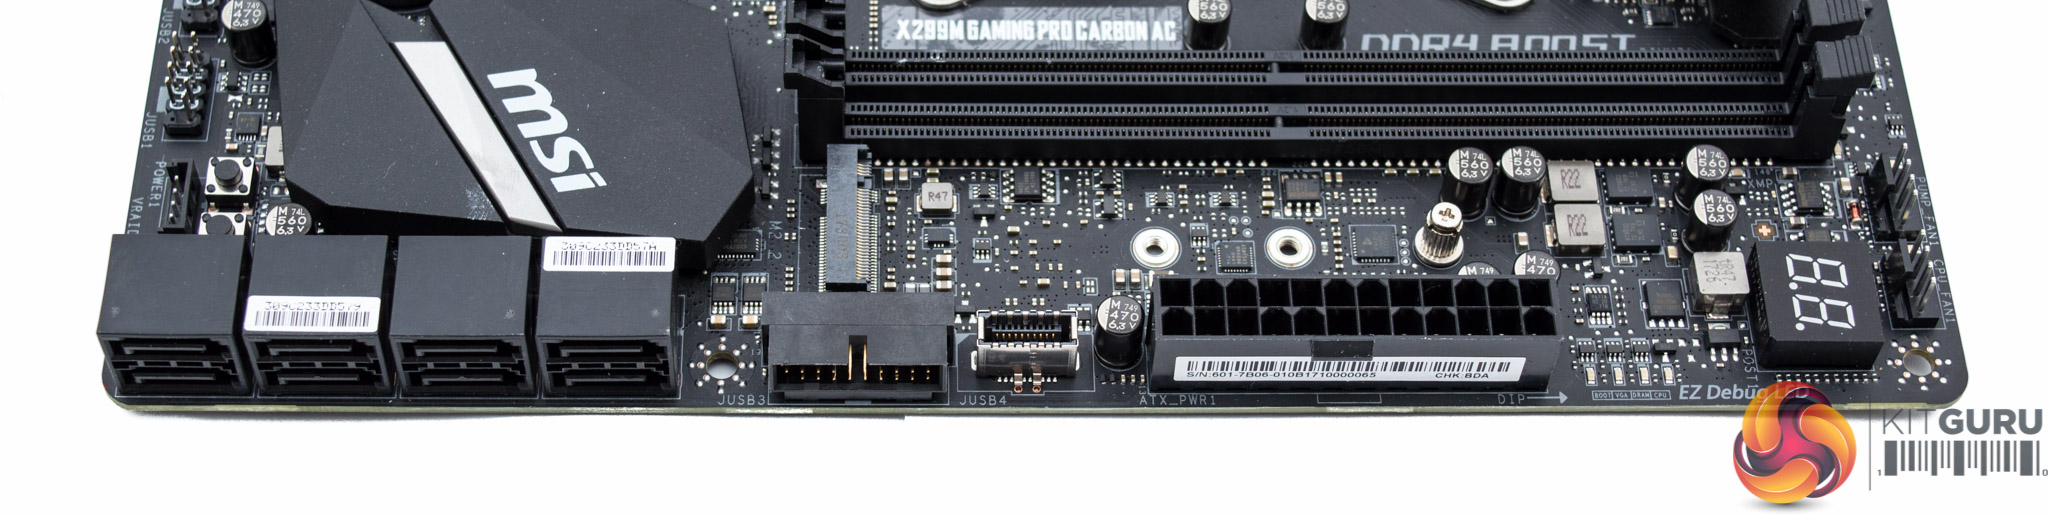 MSI X299M Gaming Pro Carbon AC Motherboard Review | KitGuru - Part 3